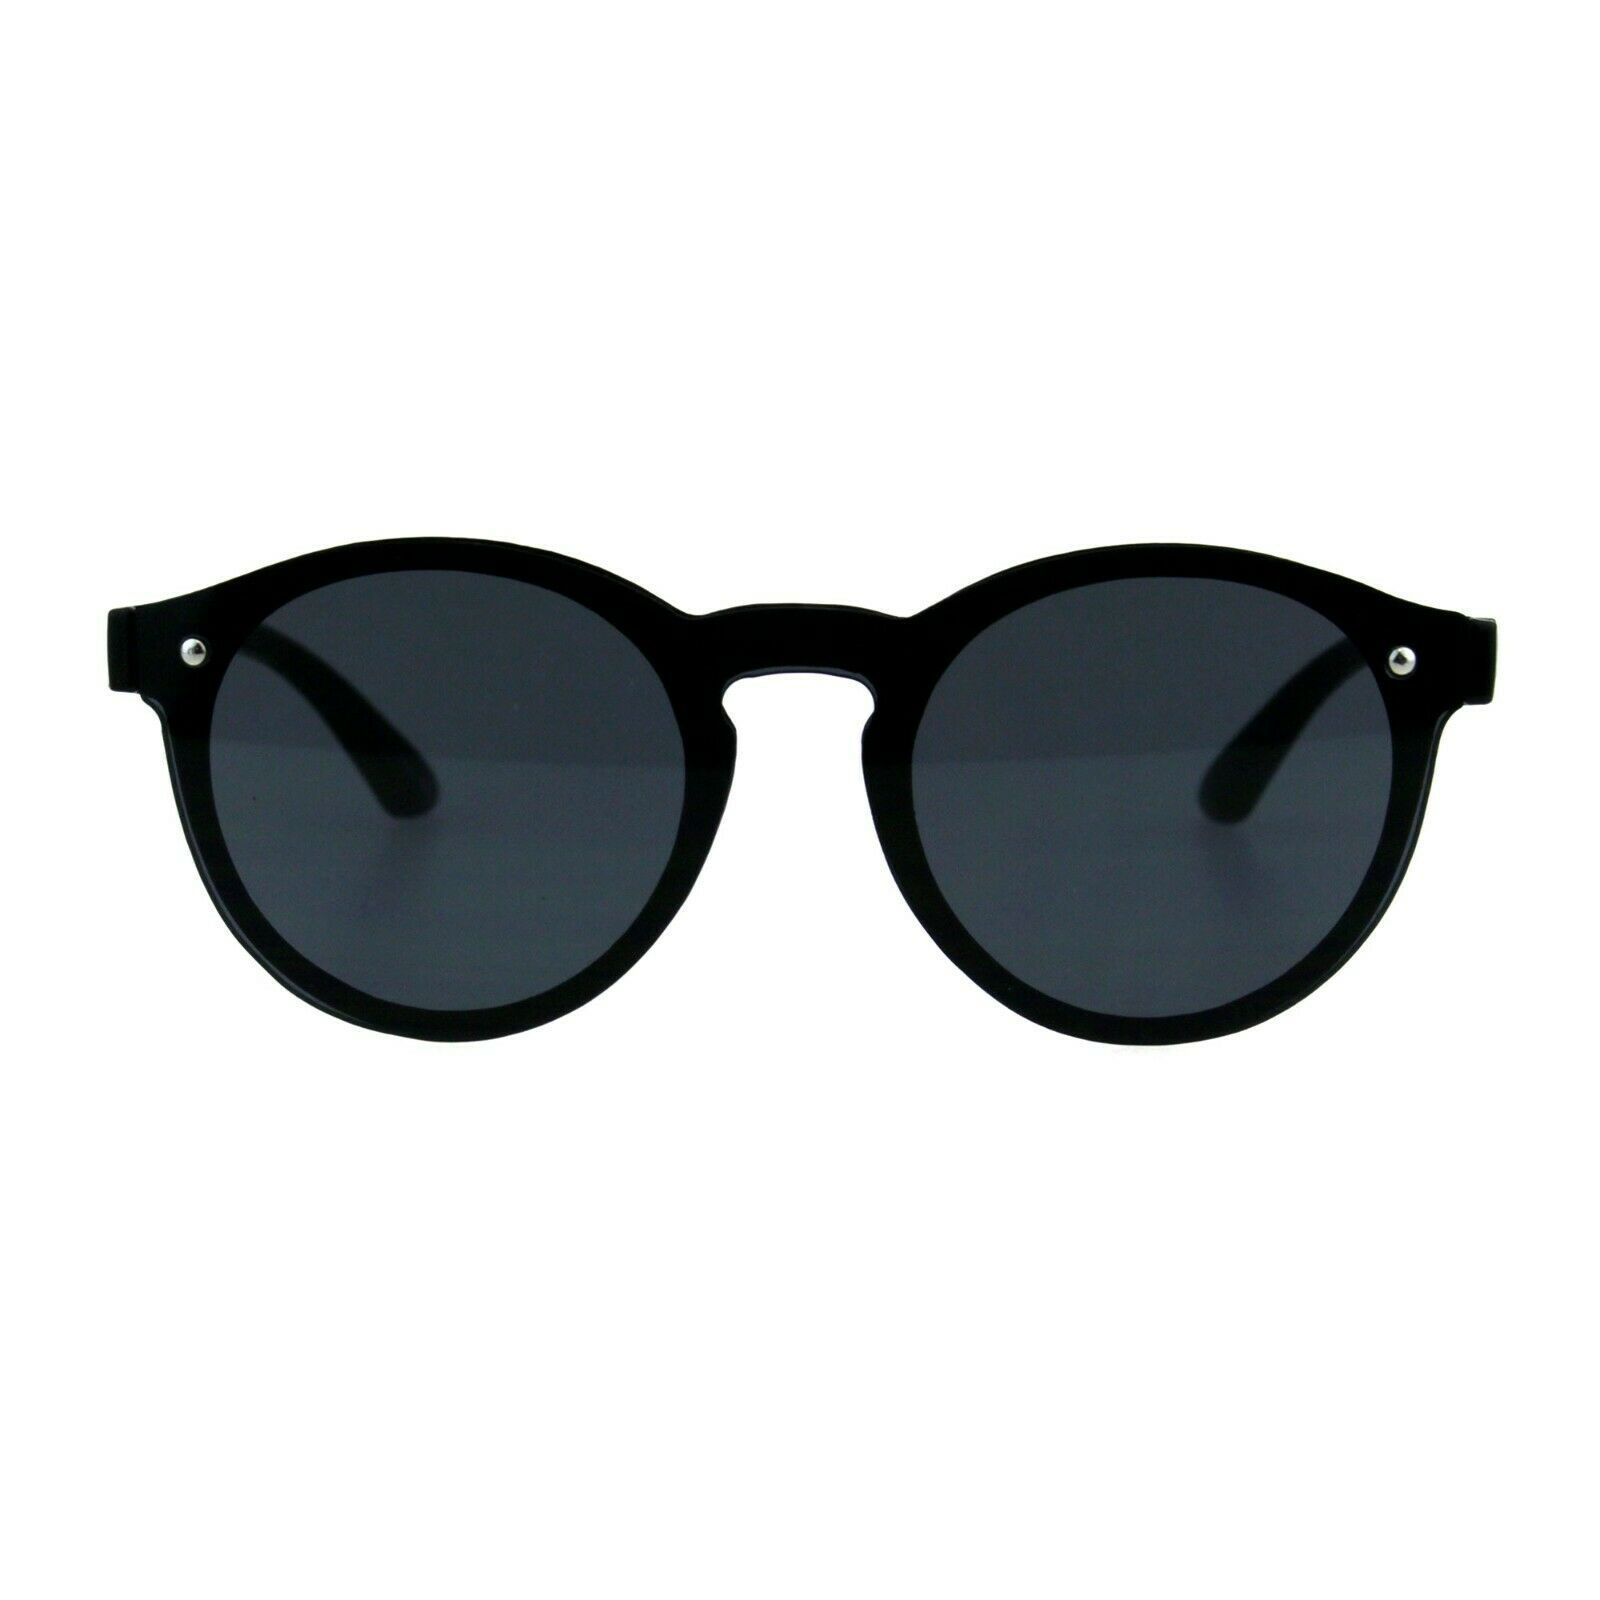 Primary image for Kid's Fashion Sunglasses Girls Boys Round Keyhole Plastic Frame UV 400